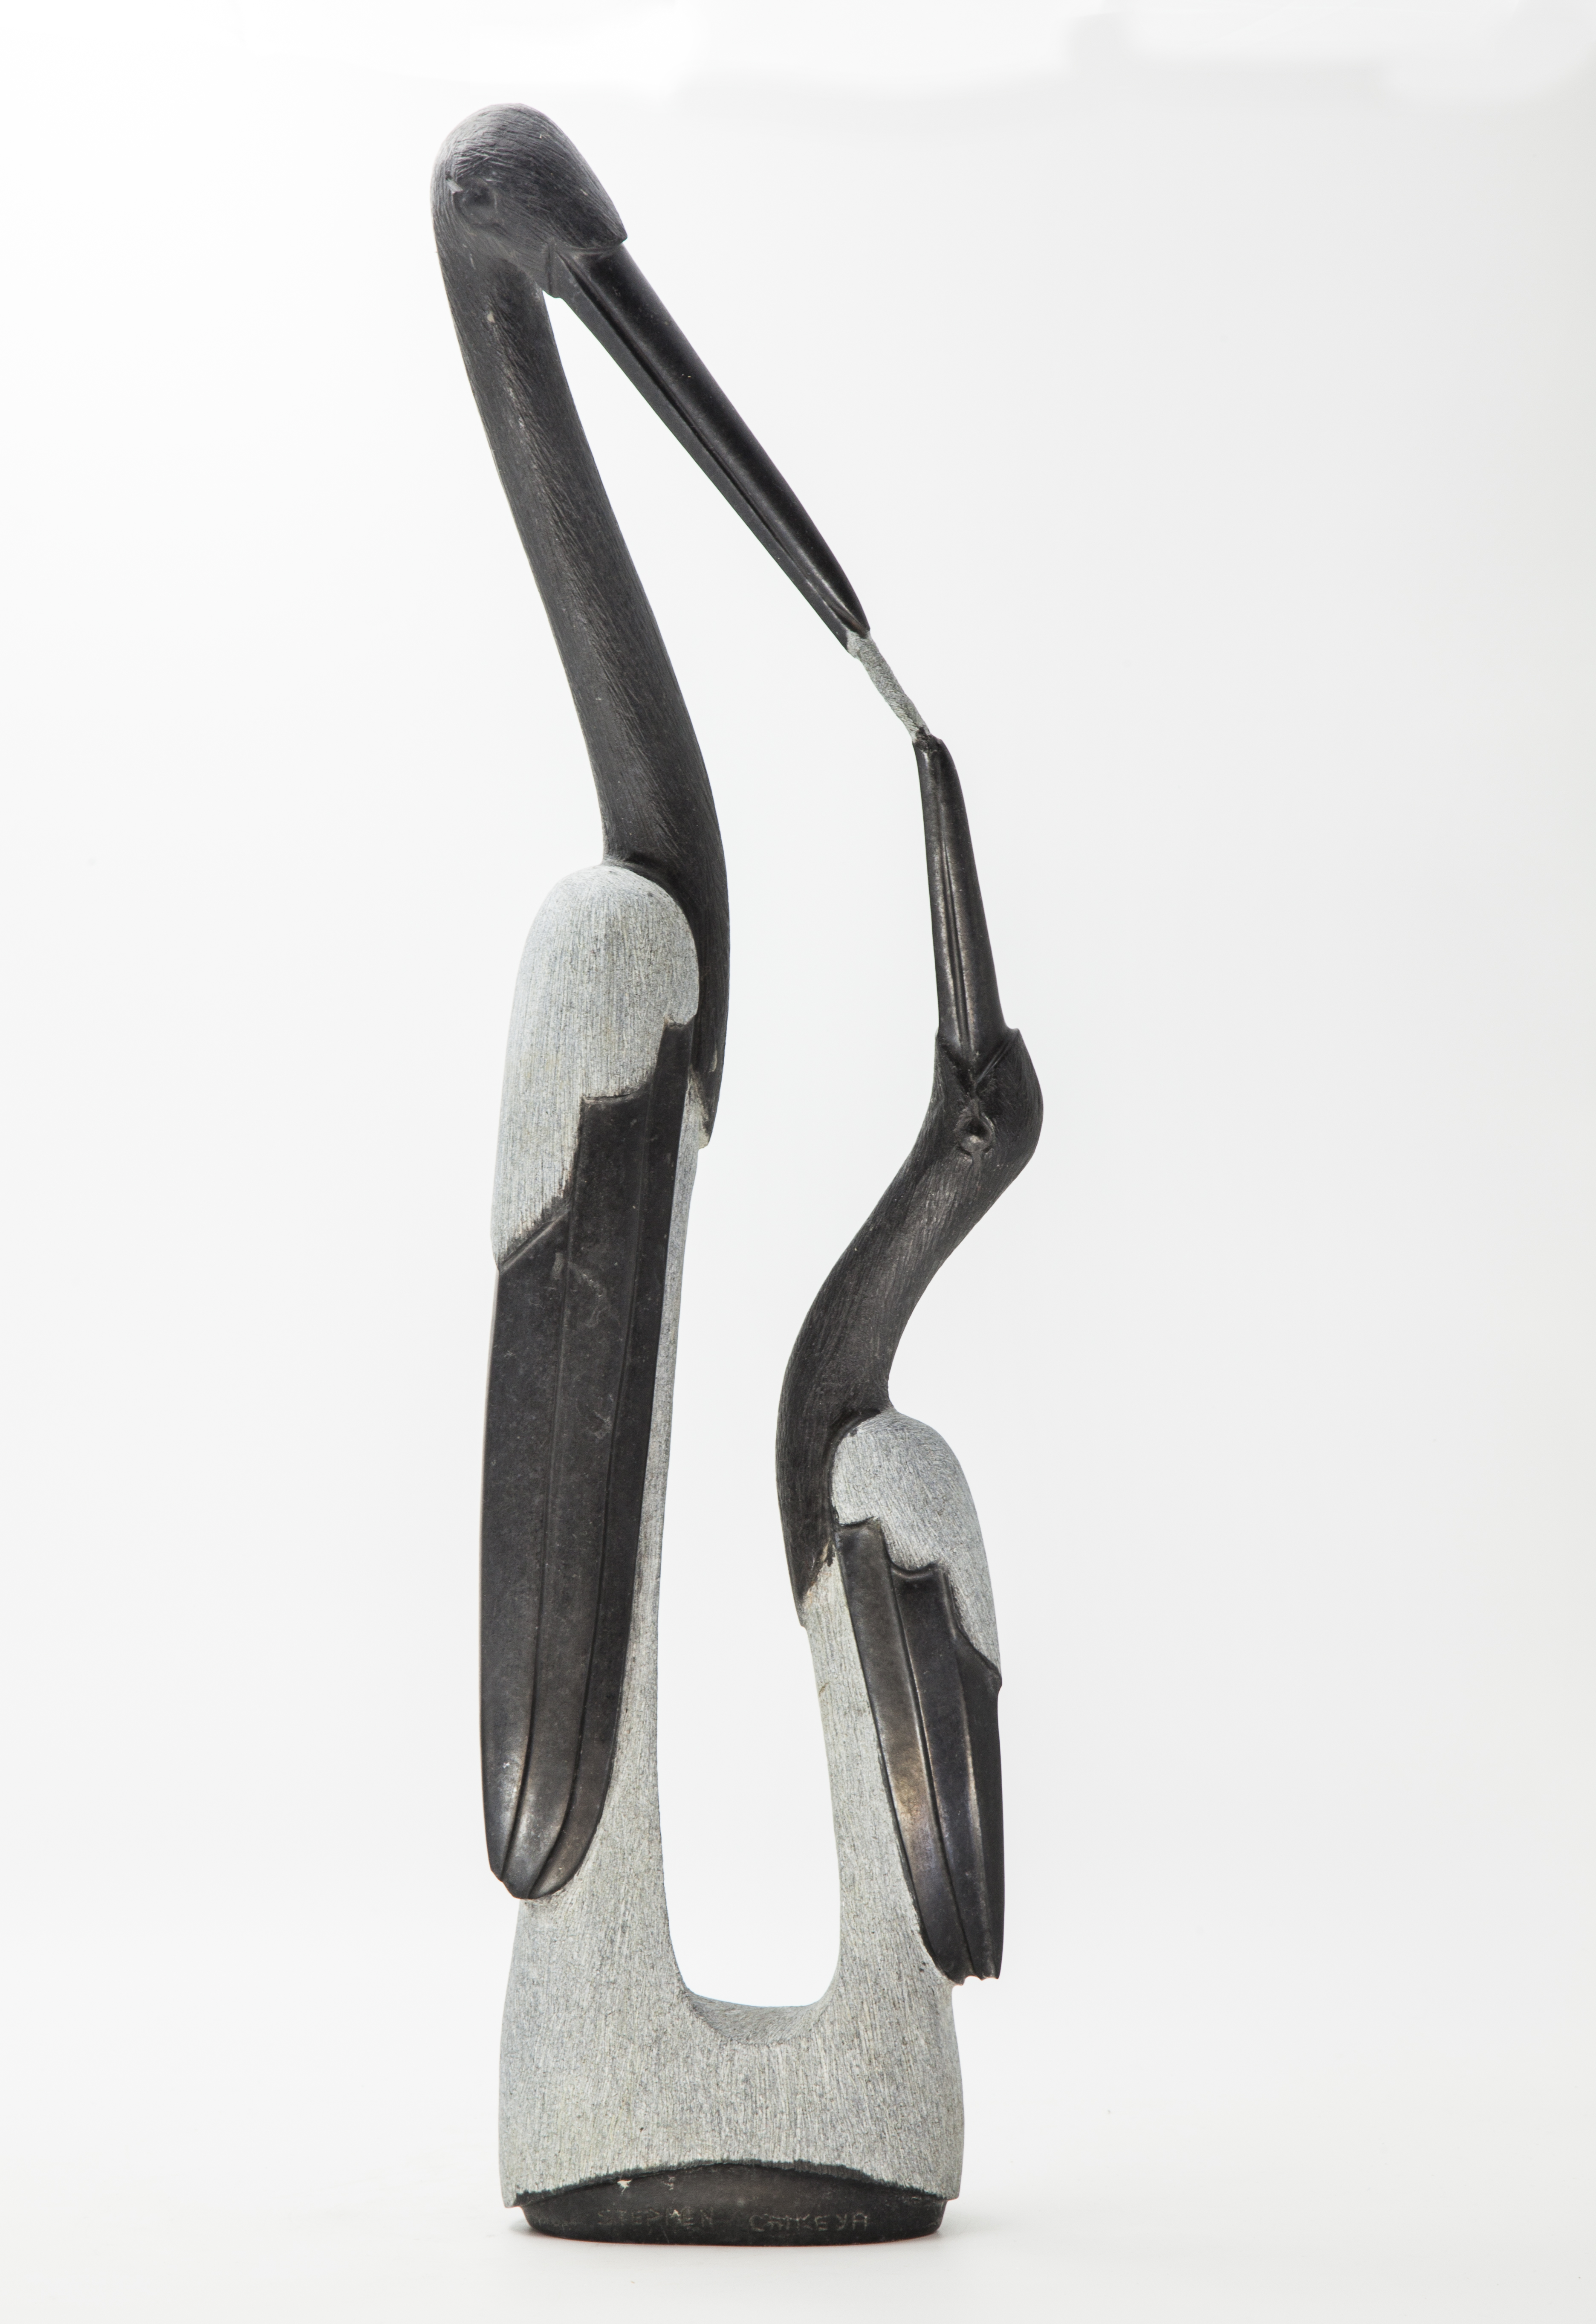 Modern Sculpture: Steven Dambaza Feeding my Own Springstone Signed 64cm high by 19cm wide by 11cm